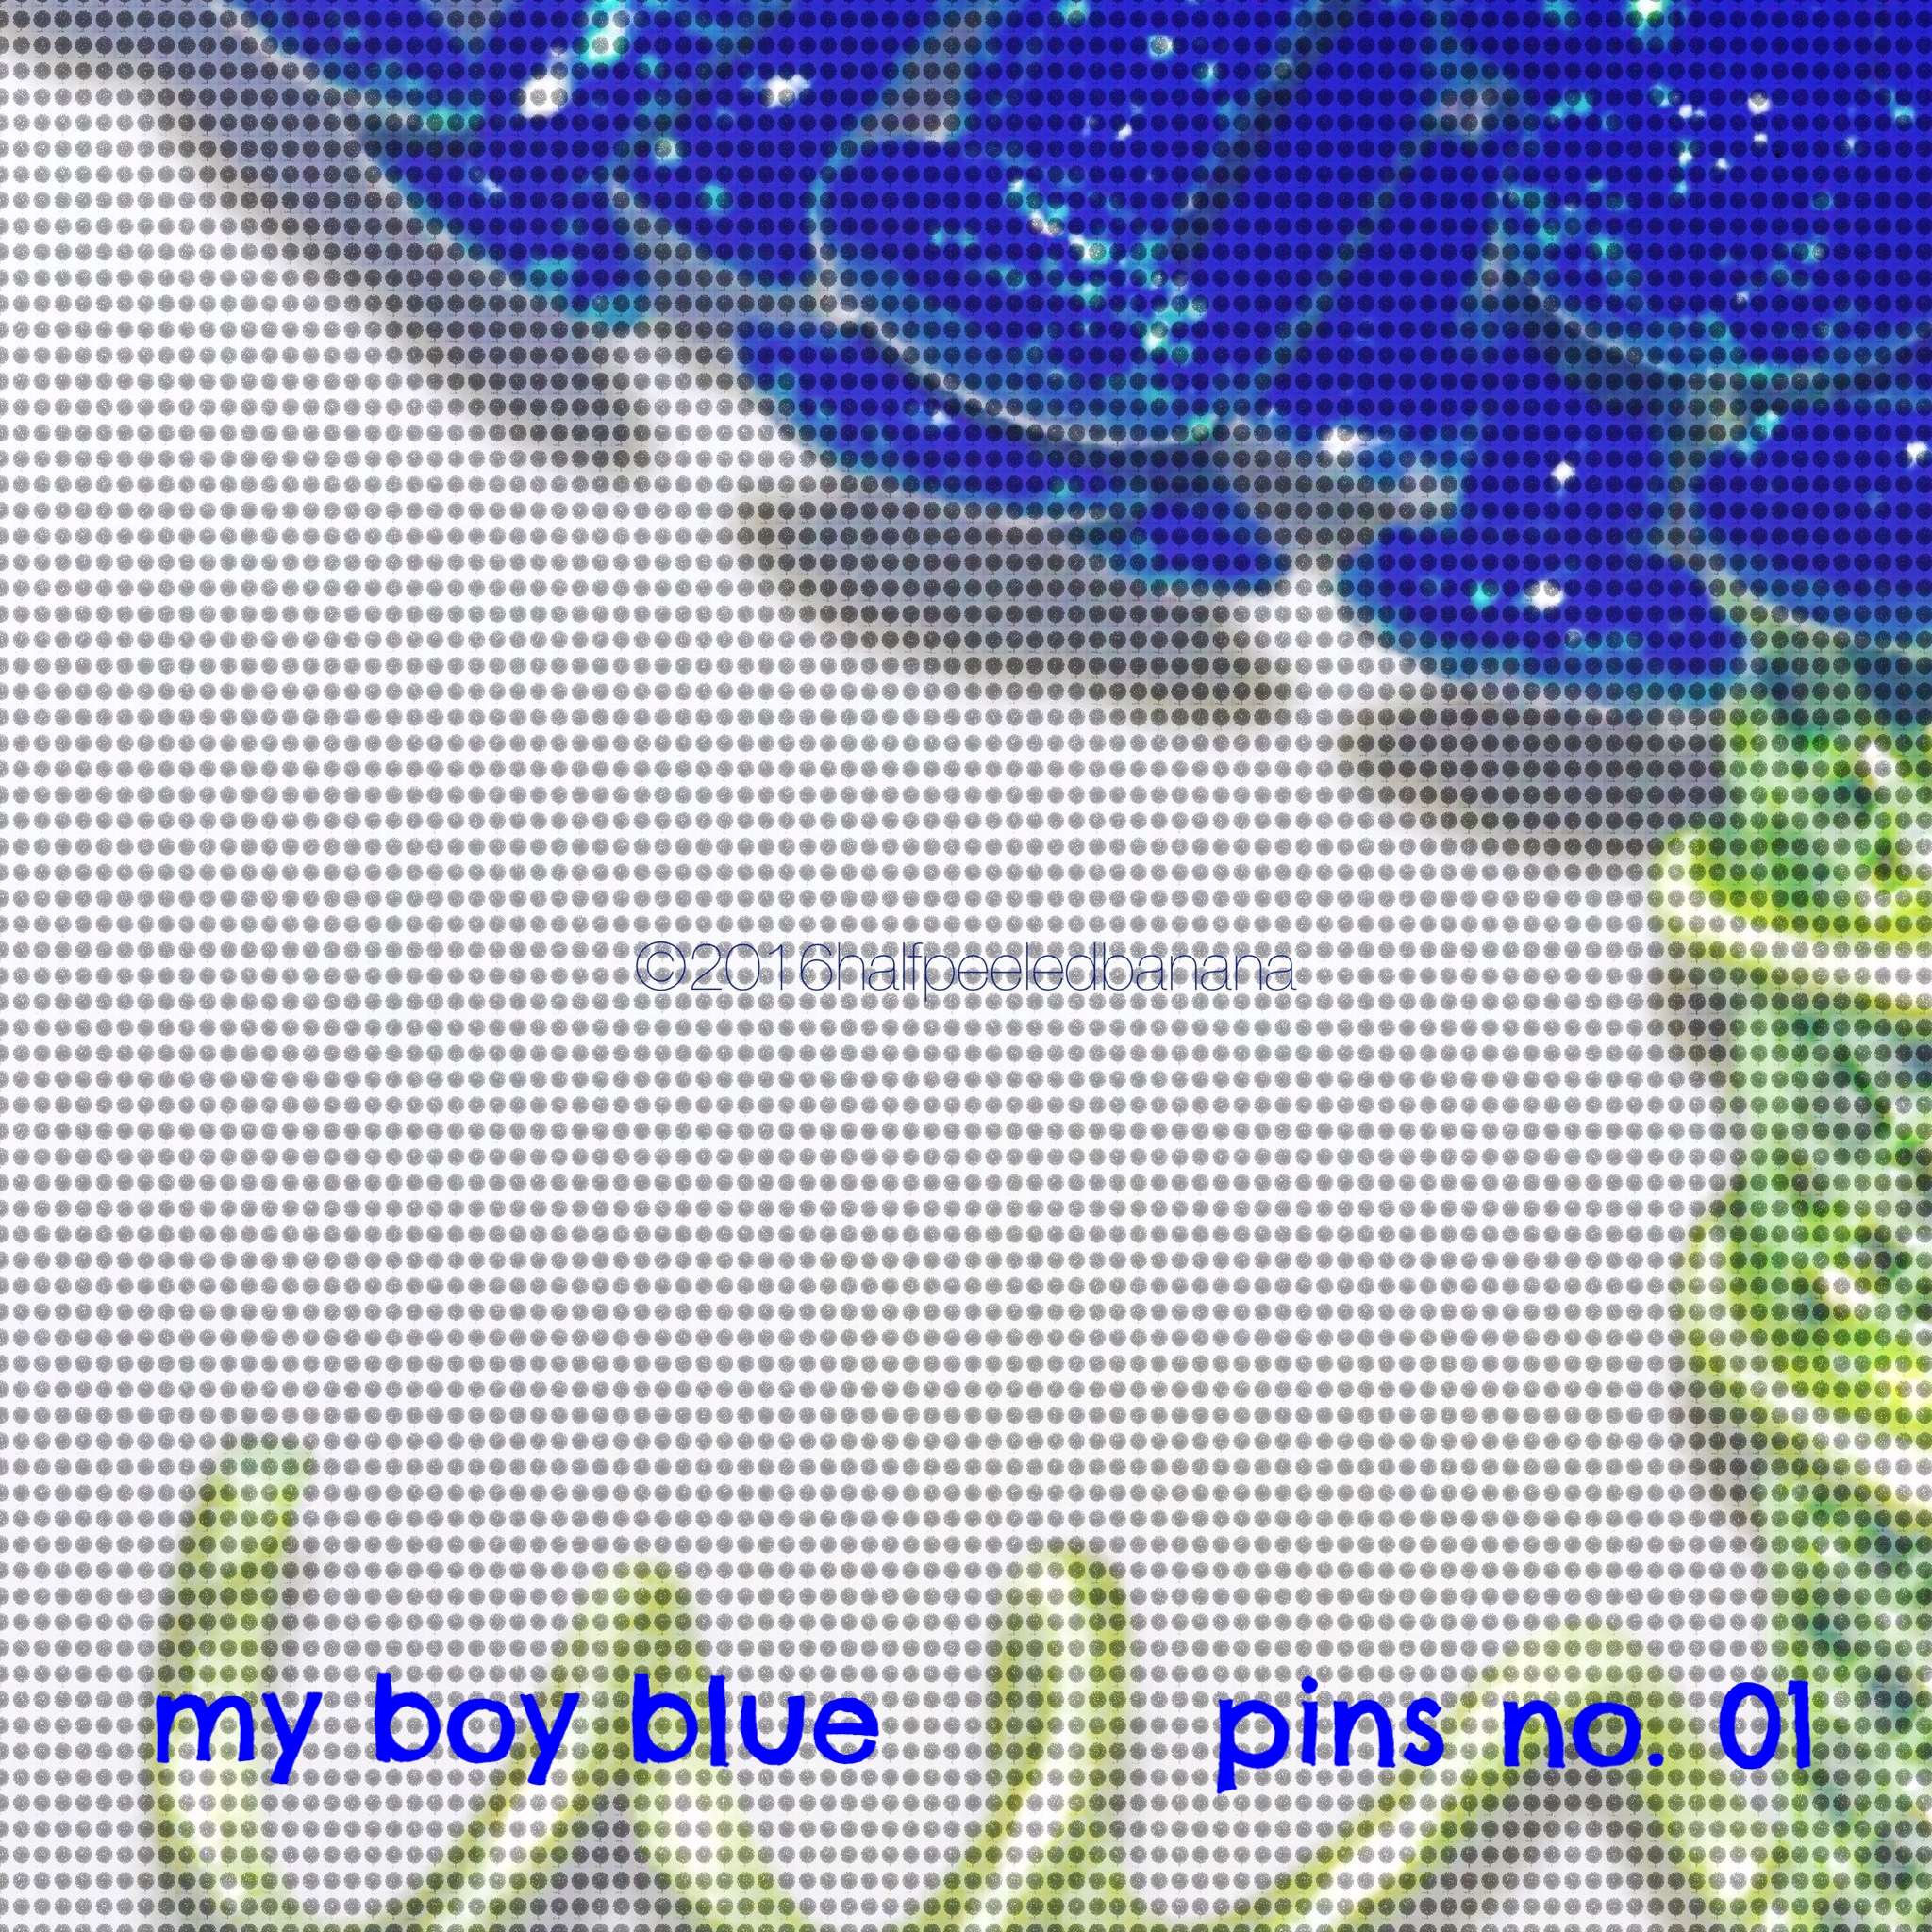 my boy blue - pins print no. 01